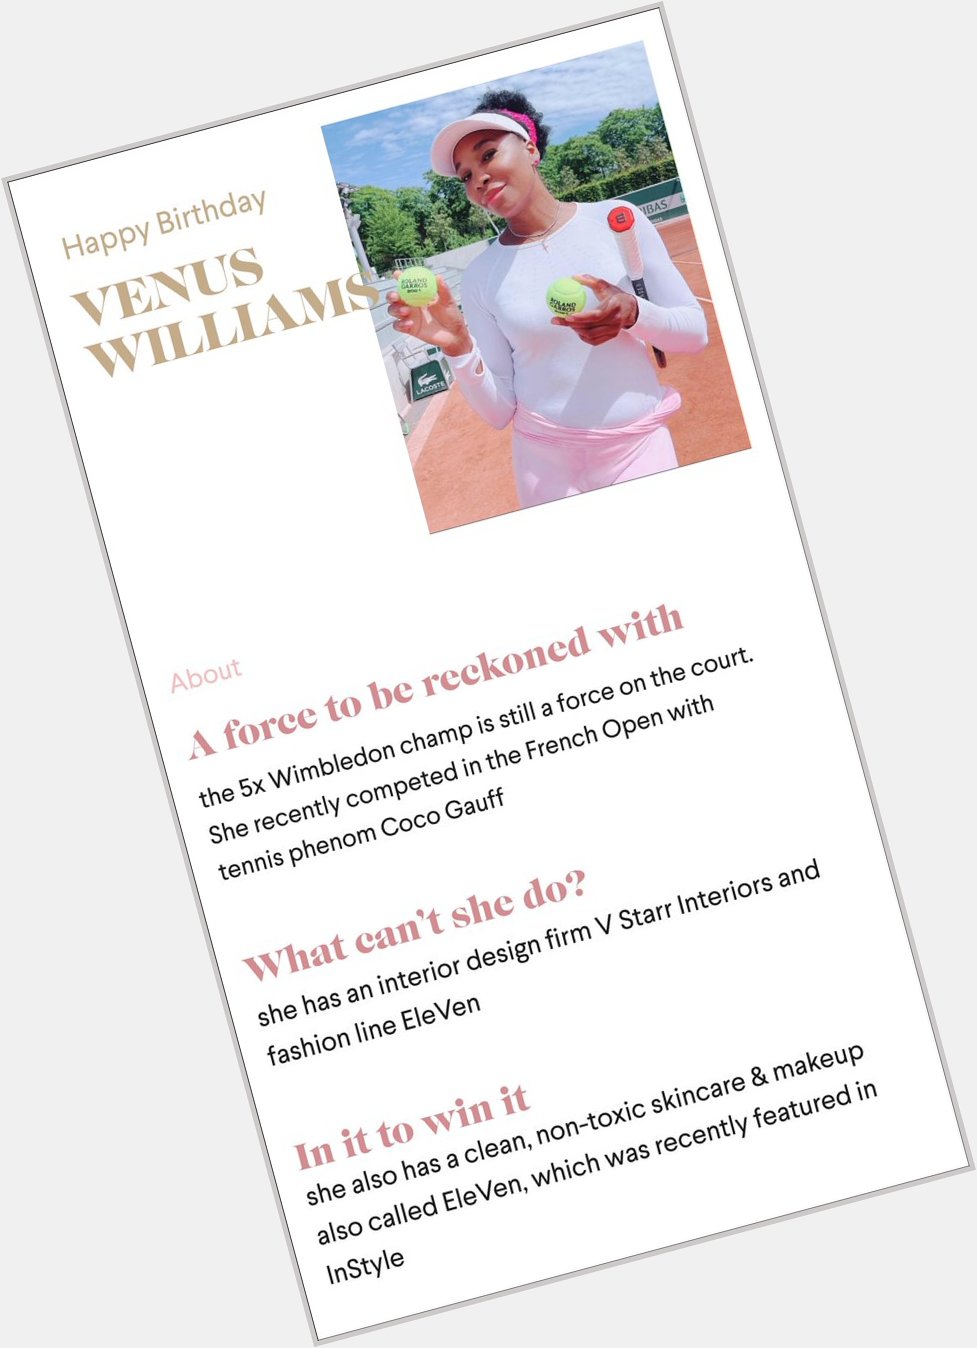 Happy birthday Venus Williams! 